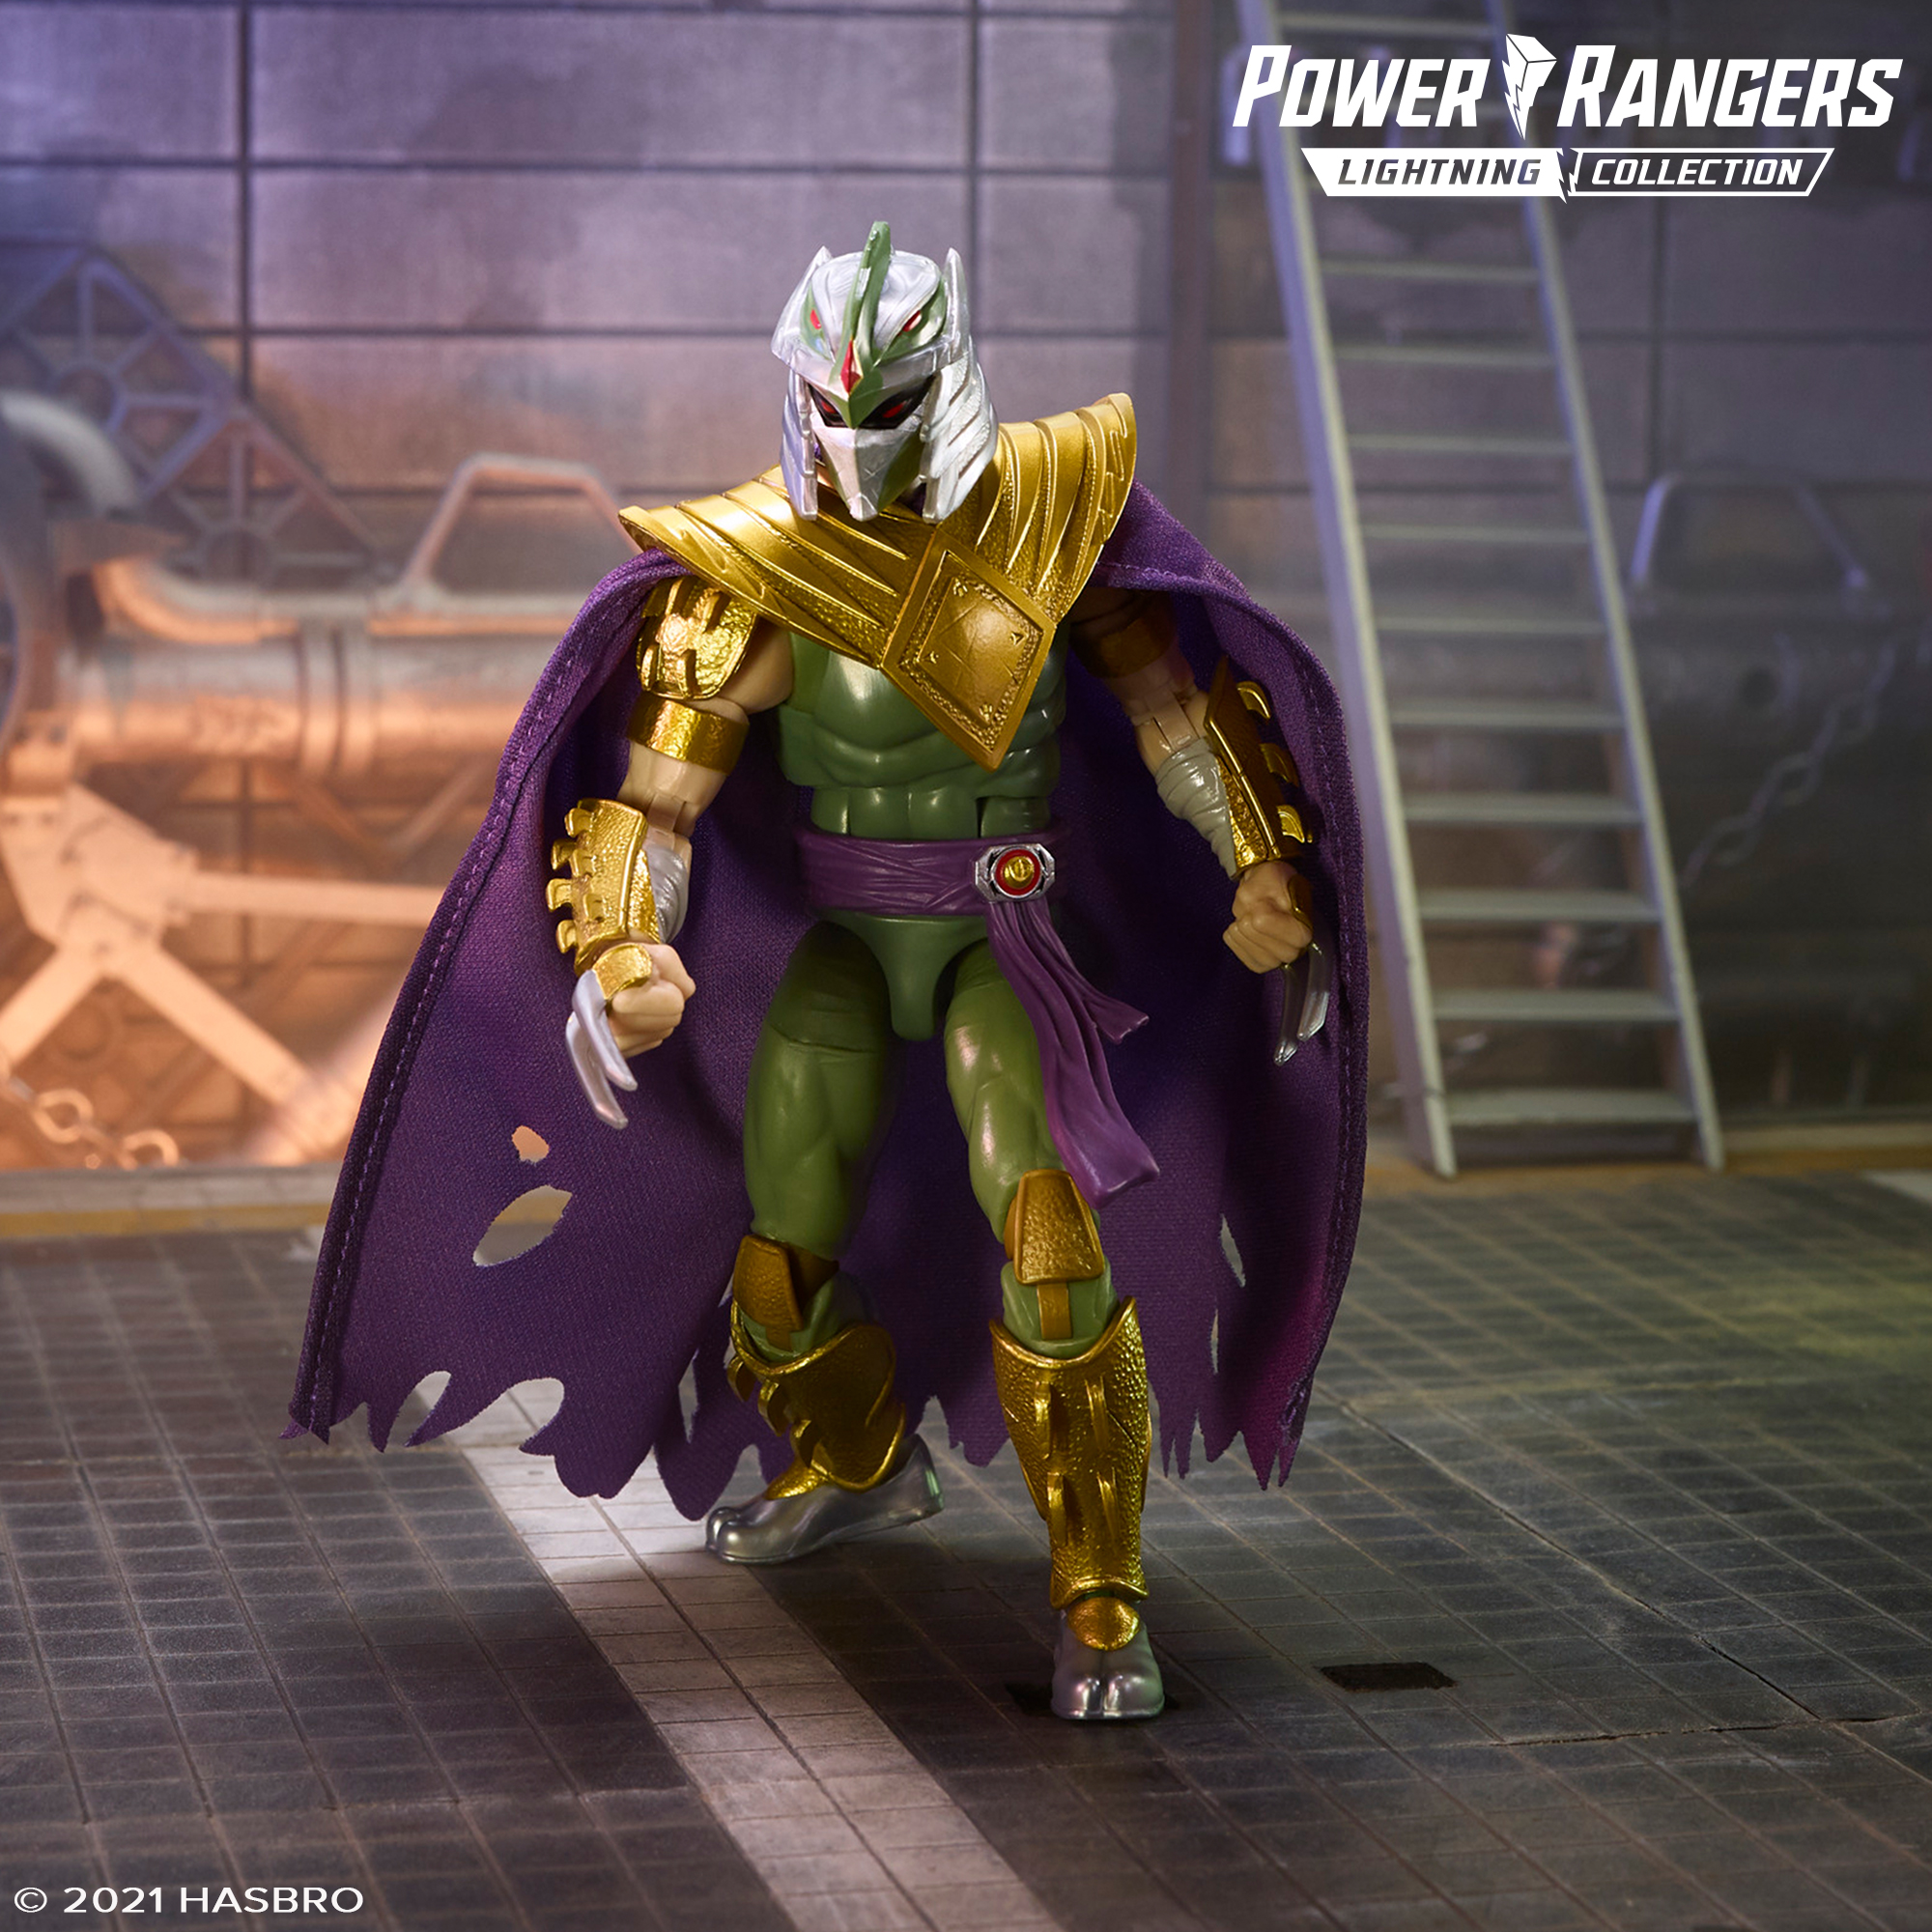 Power Rangers X Teenage Mutant Ninja Turtles Lightning Collection Morphed Shredder Revealed